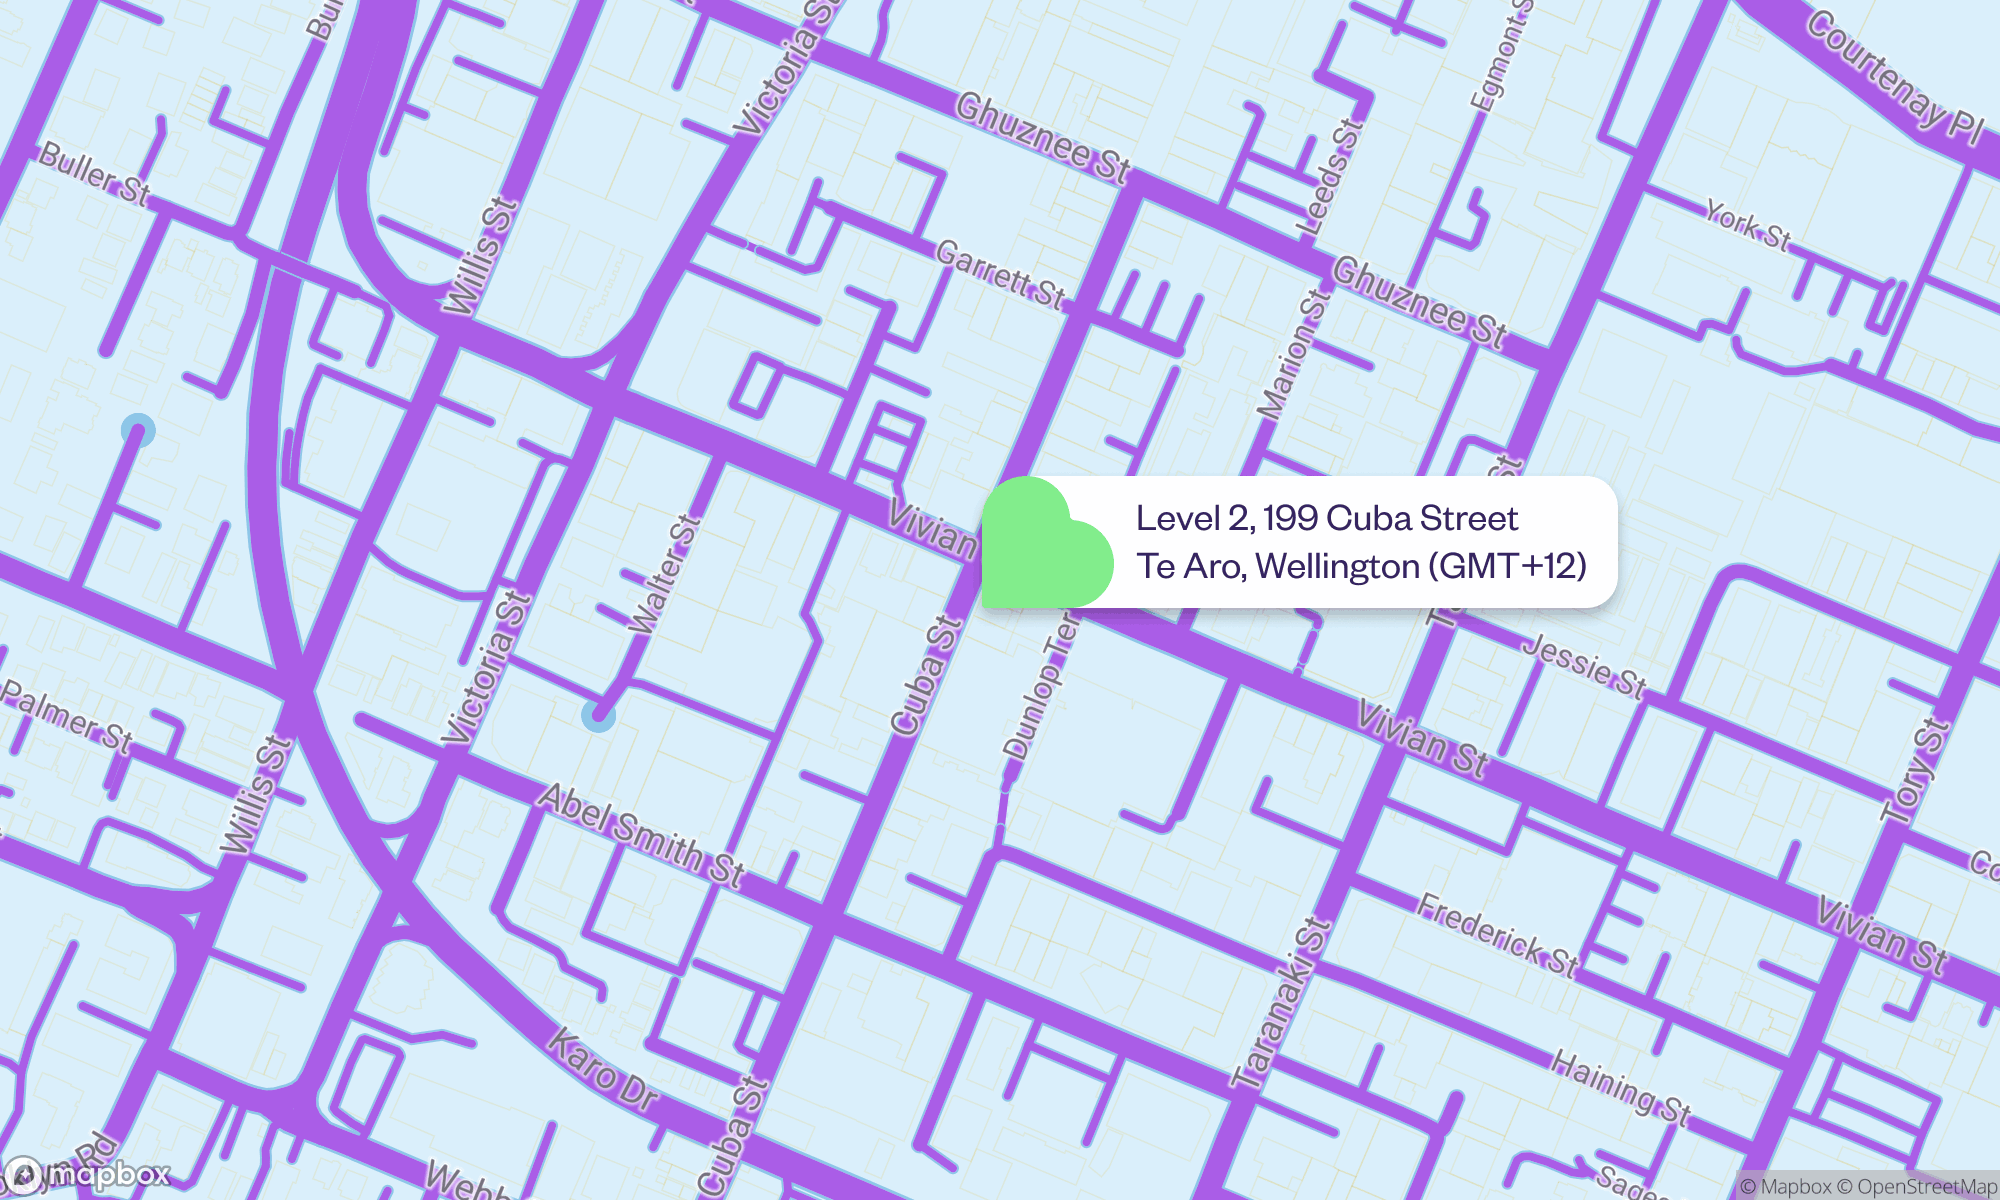 Static map of Bamboo Creative's location at Level 2, 199 Cuba Street, Wellington.